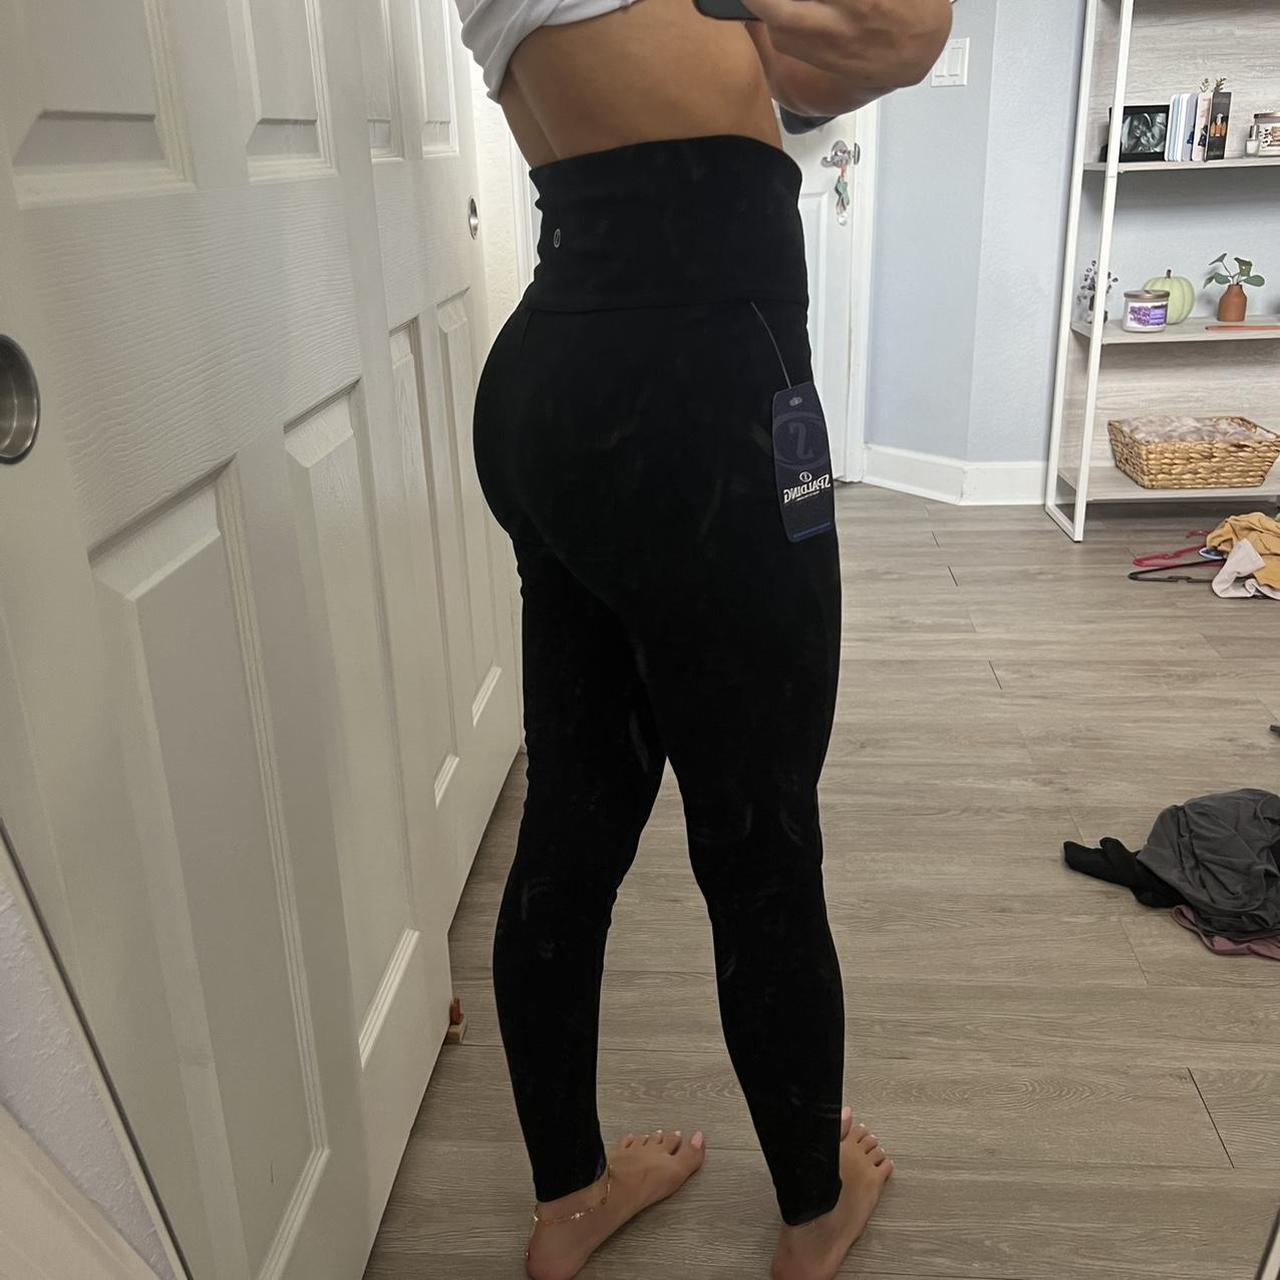 Black Kamo Fitness workout leggings, size small (0-2 - Depop